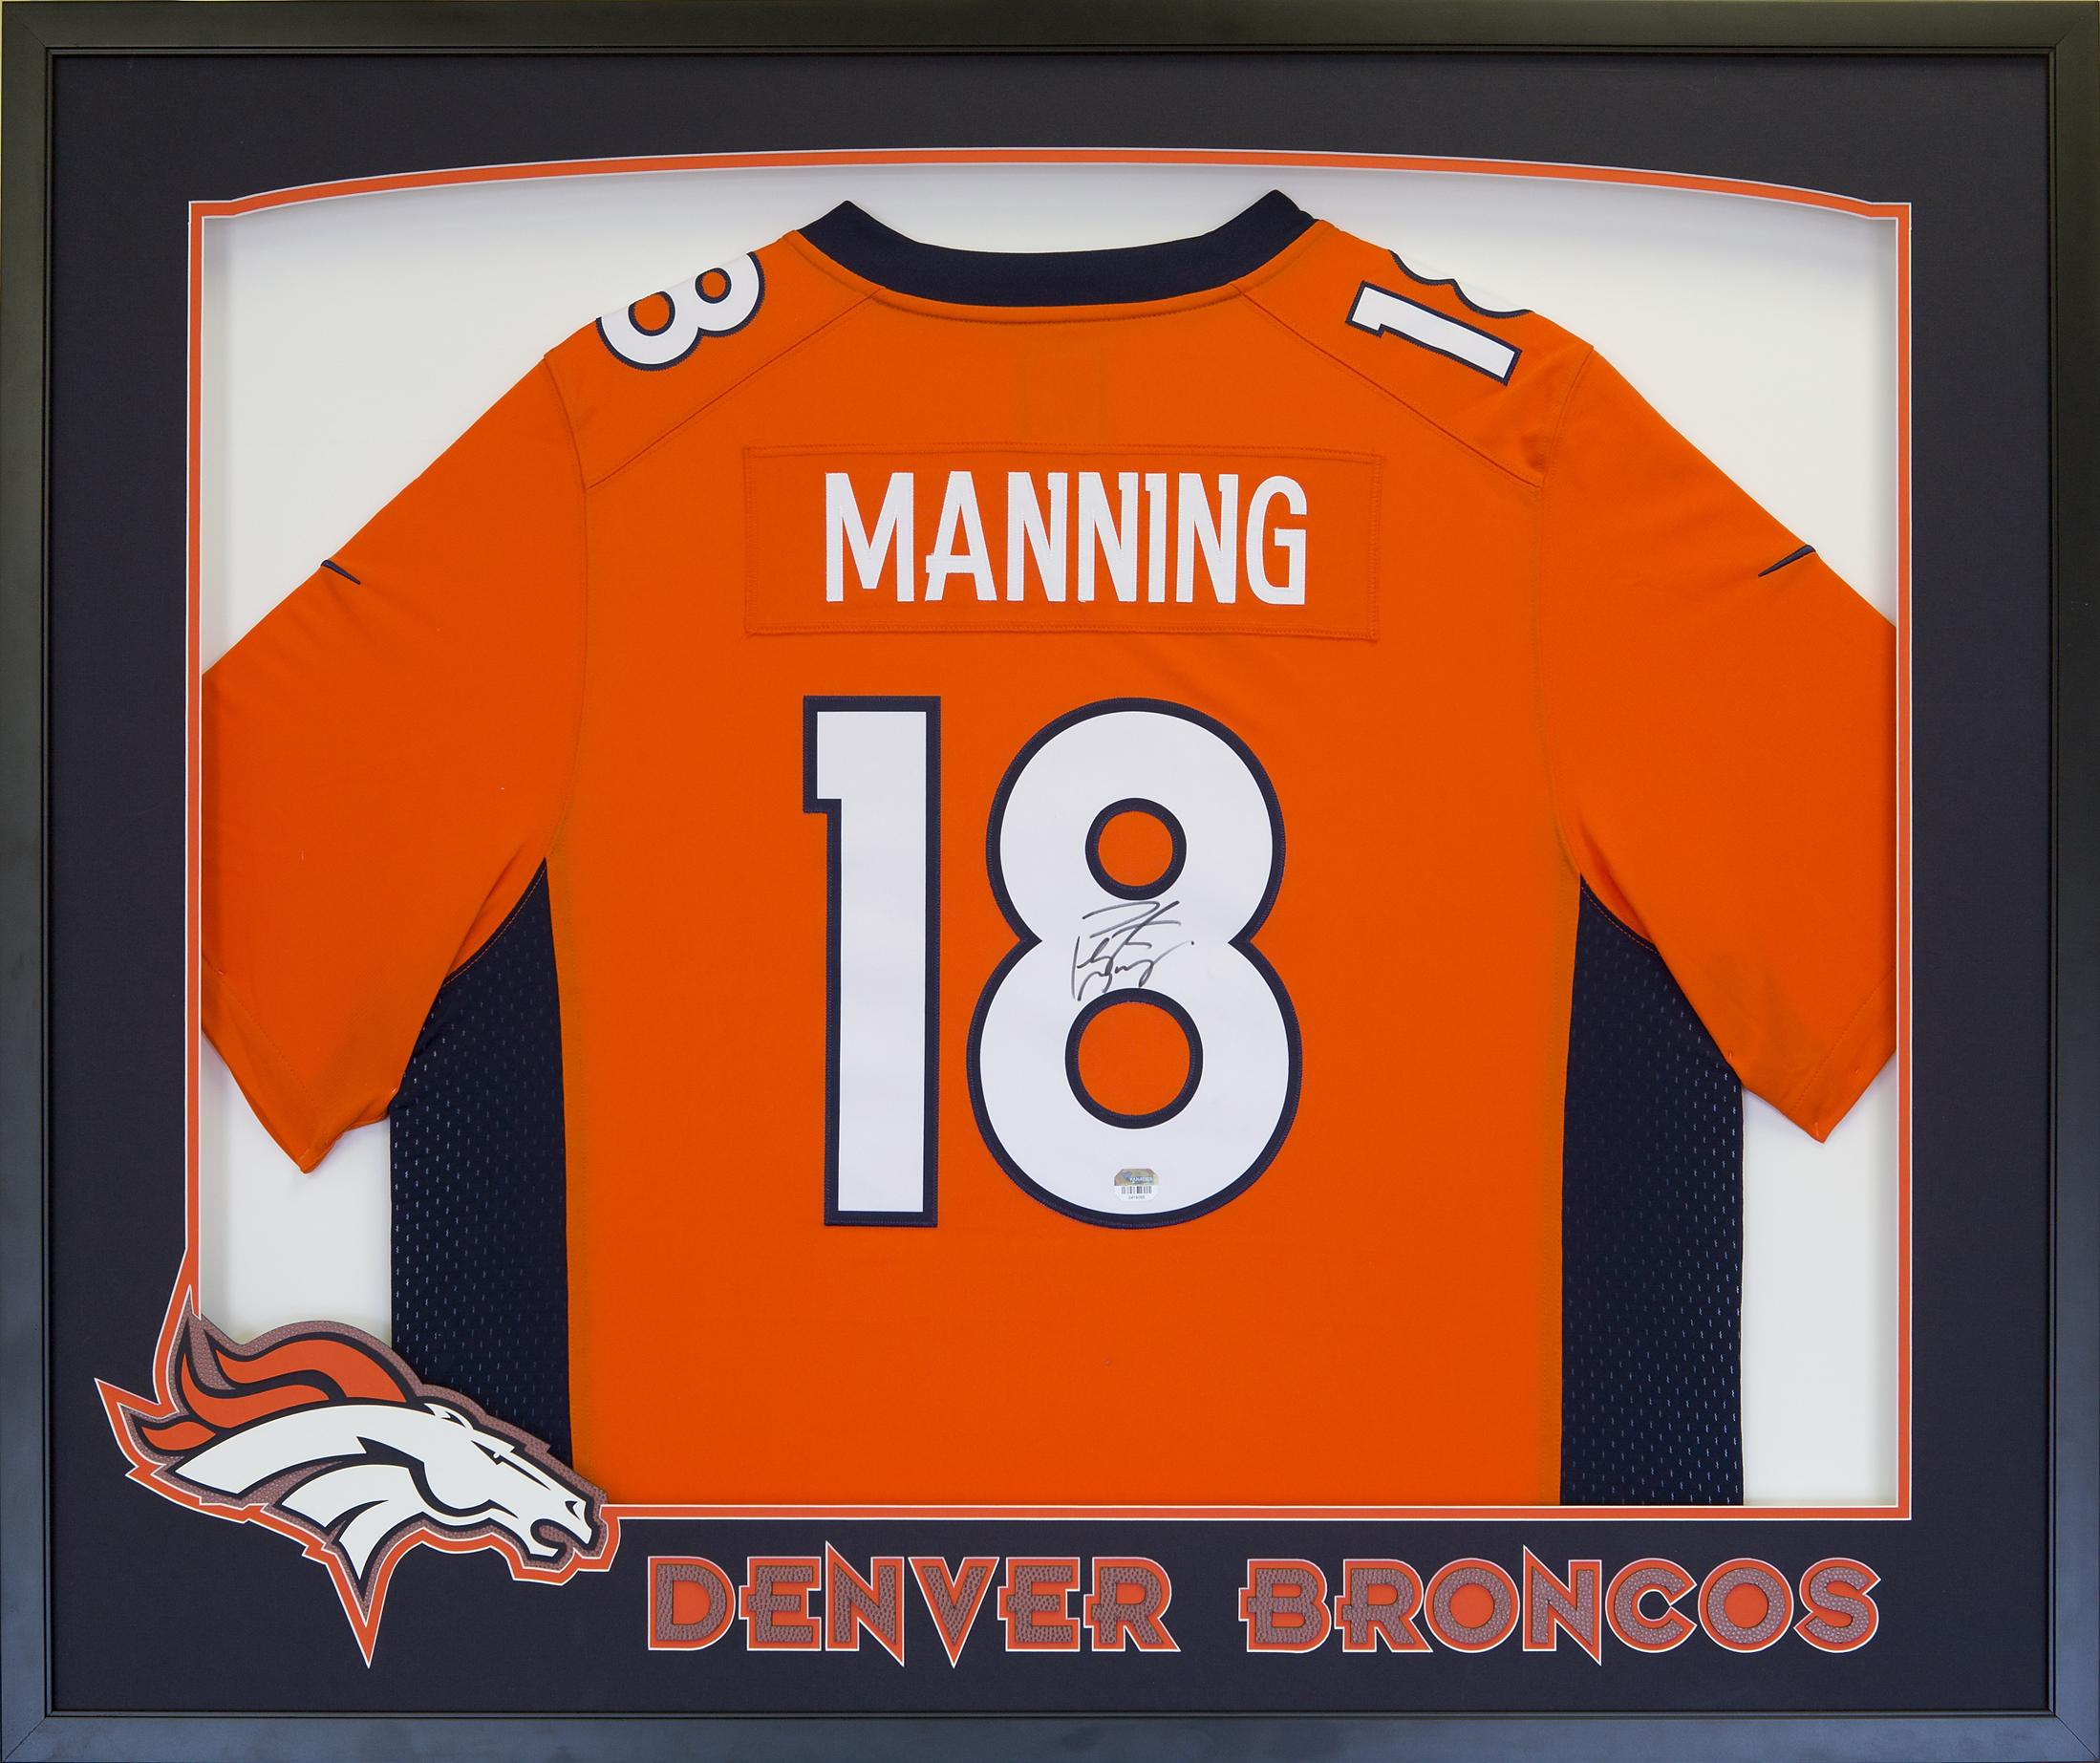 Manning Jersey Smaller.jpg